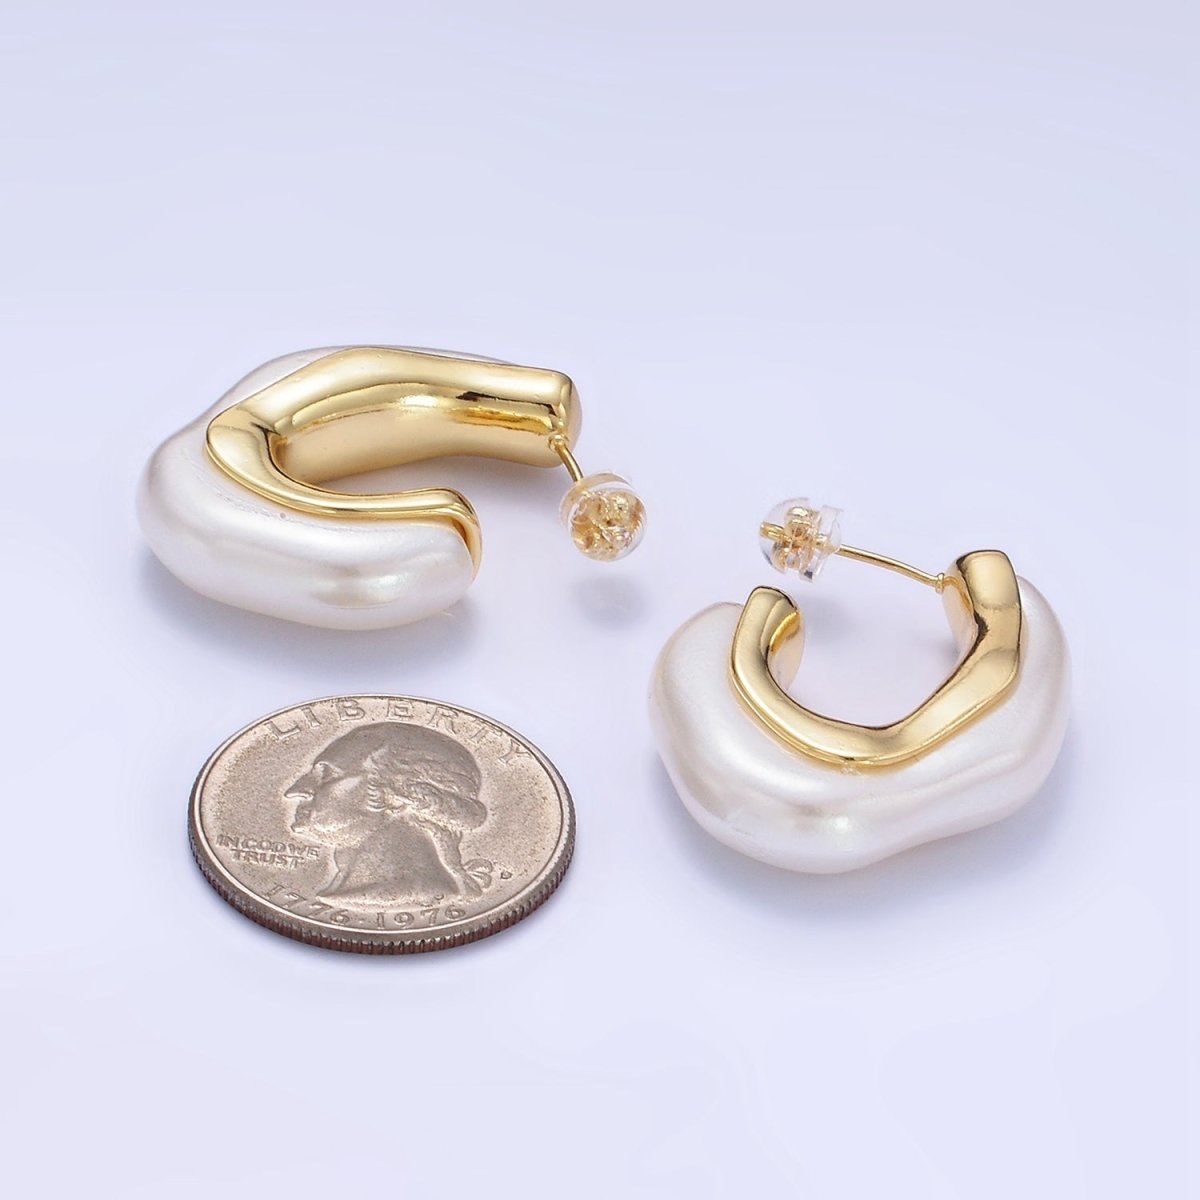 24K Gold Filled 30mm Shell Pearl Geometric J-Shaped Hoop Earrings | Q193 - DLUXCA